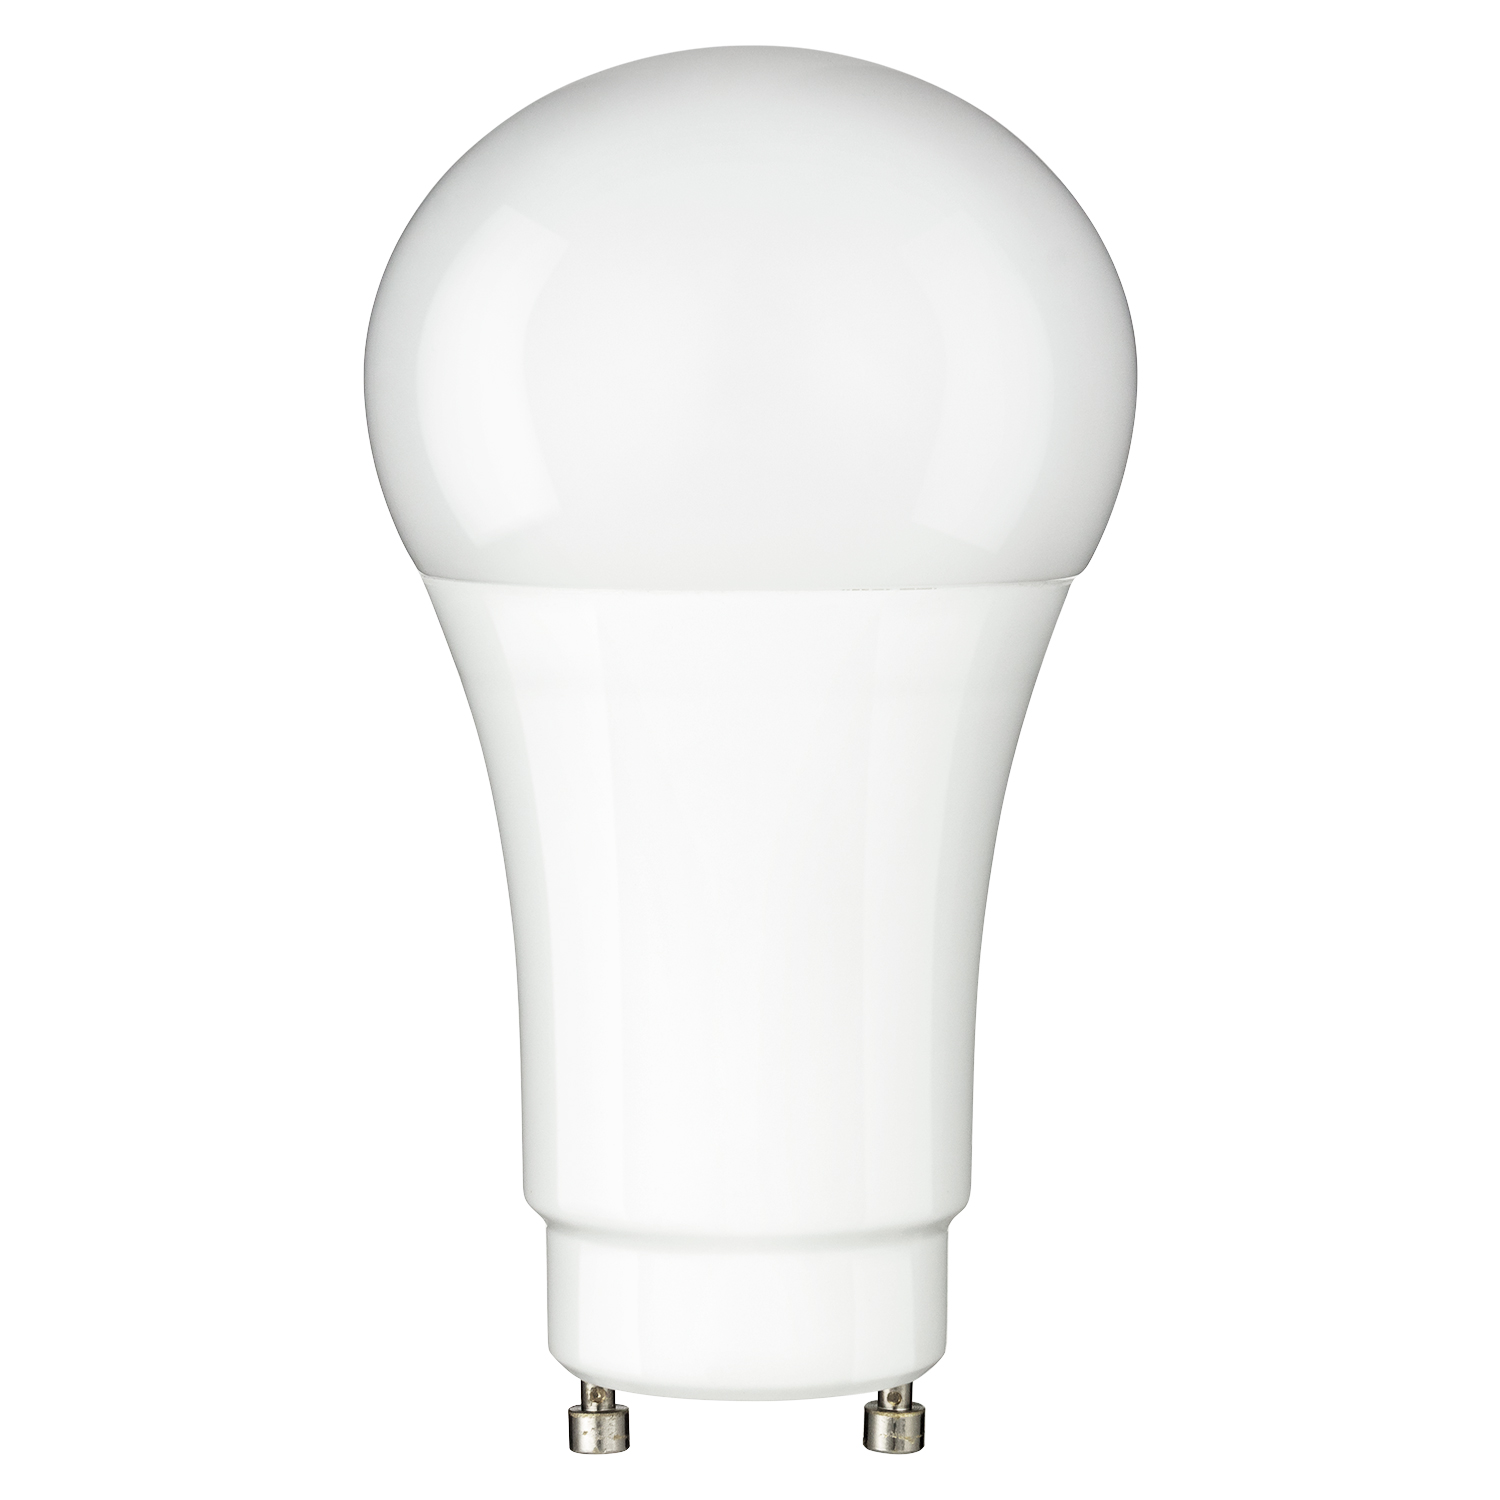 Light Bulb LED GU24 Twist n Lock Base Dimmable UL Listed 2700K